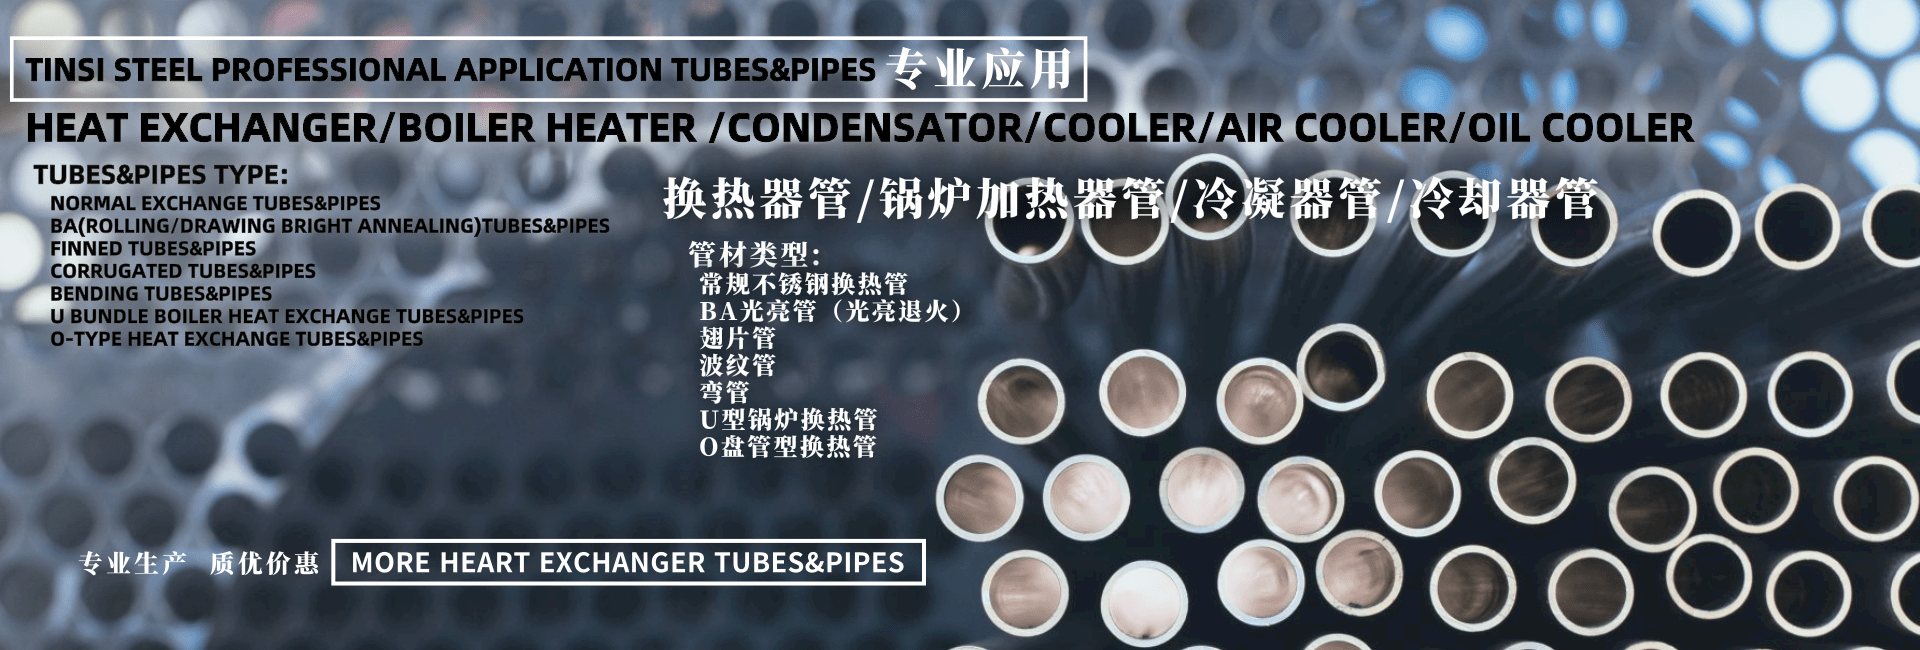 heat exchange boiler Condensator cooler tubes pipes